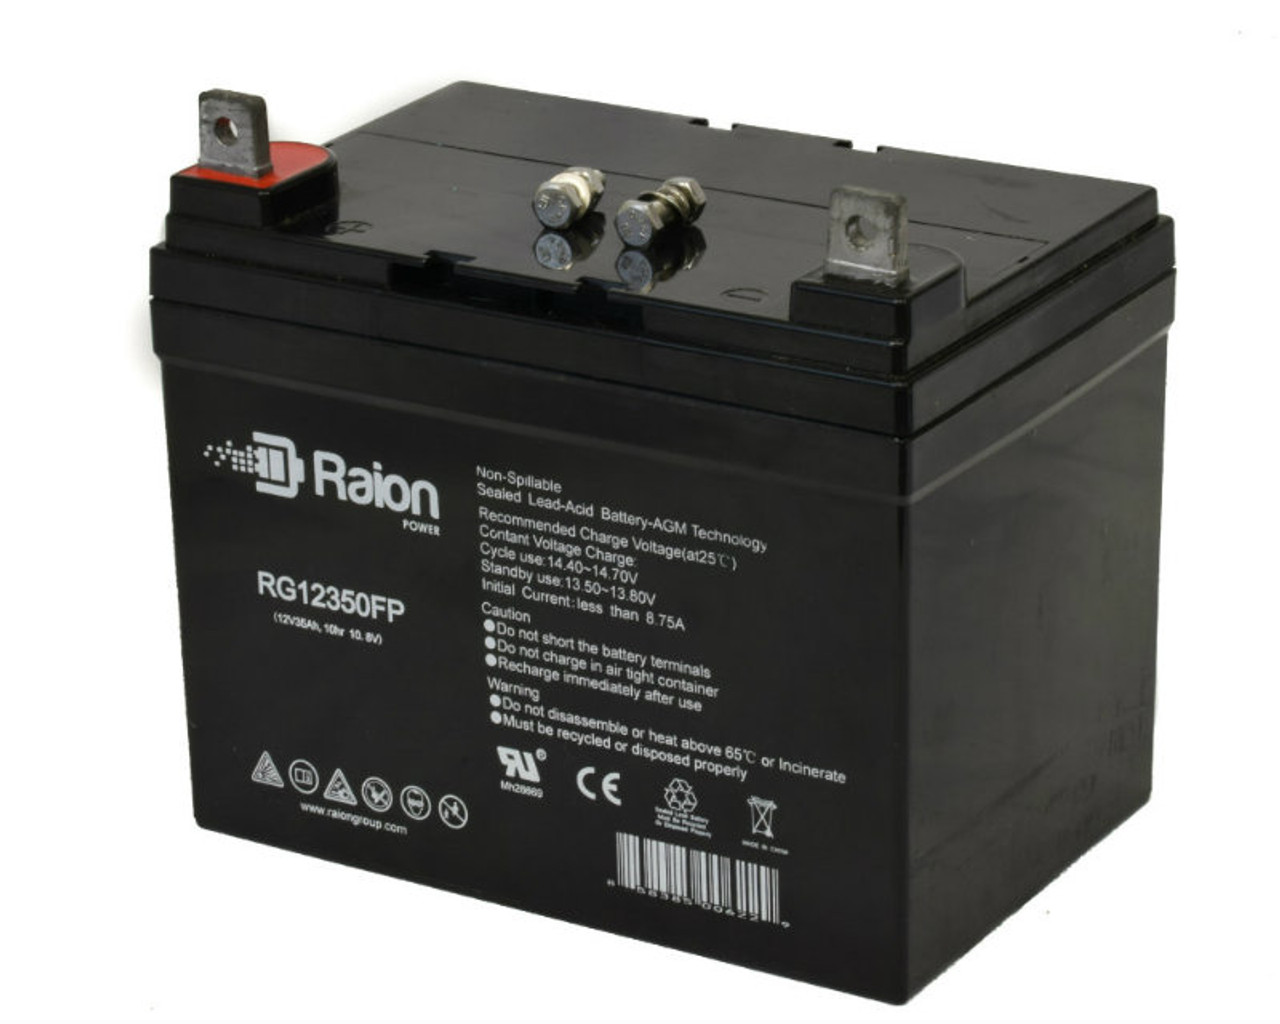 Raion Power Replacement 12V 35Ah RG12350FP Battery for Moridge MFG Co. 1622